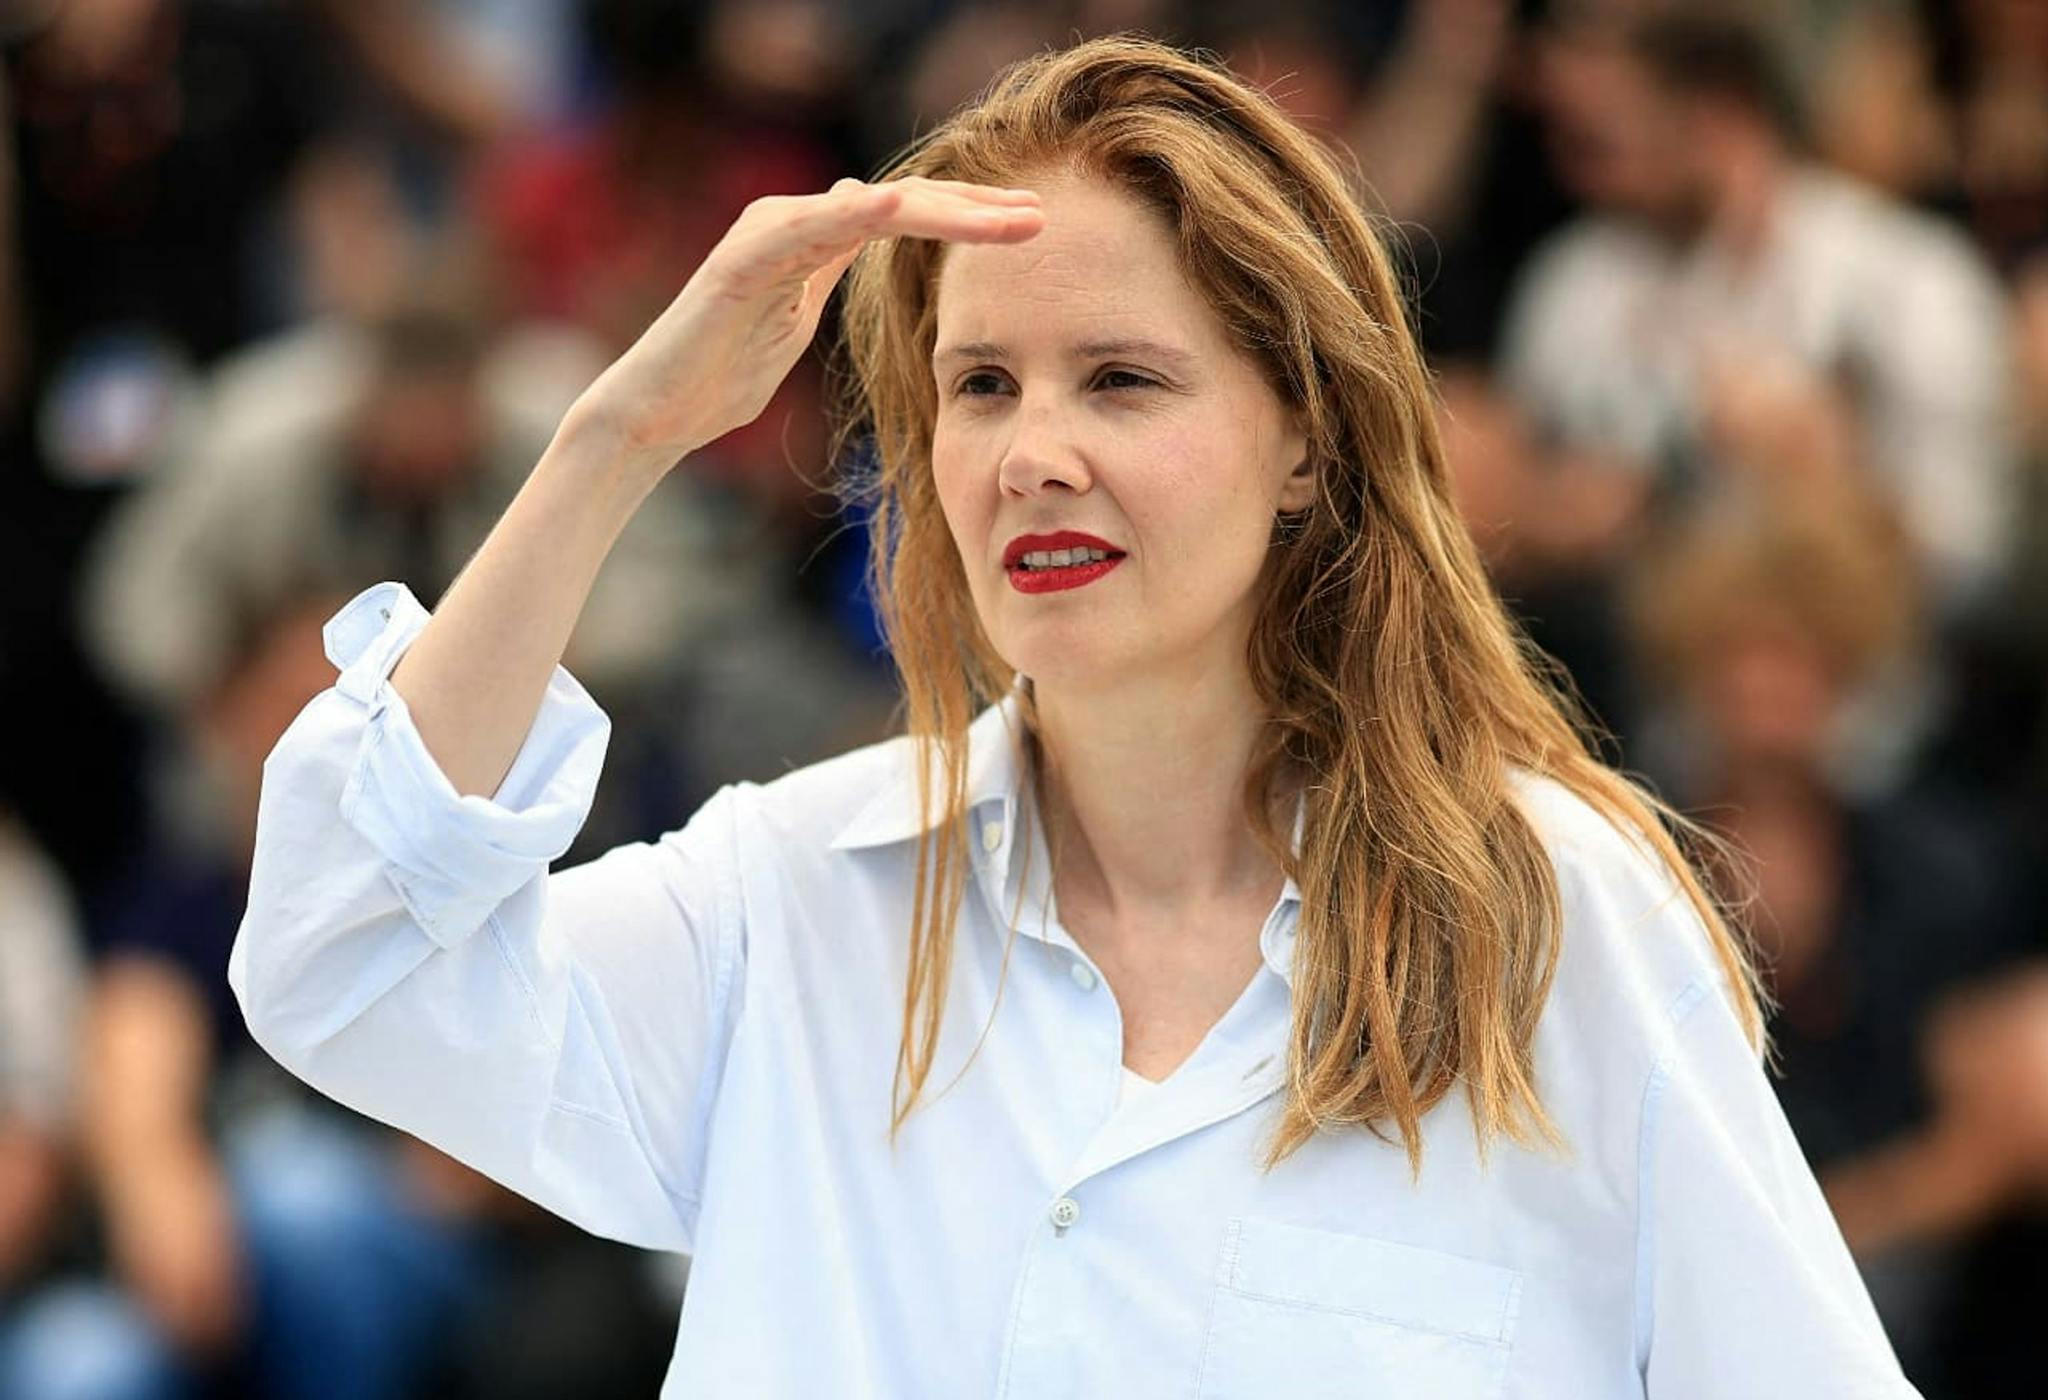 La directora francesa Justine Triet, en el Festival de Cannes